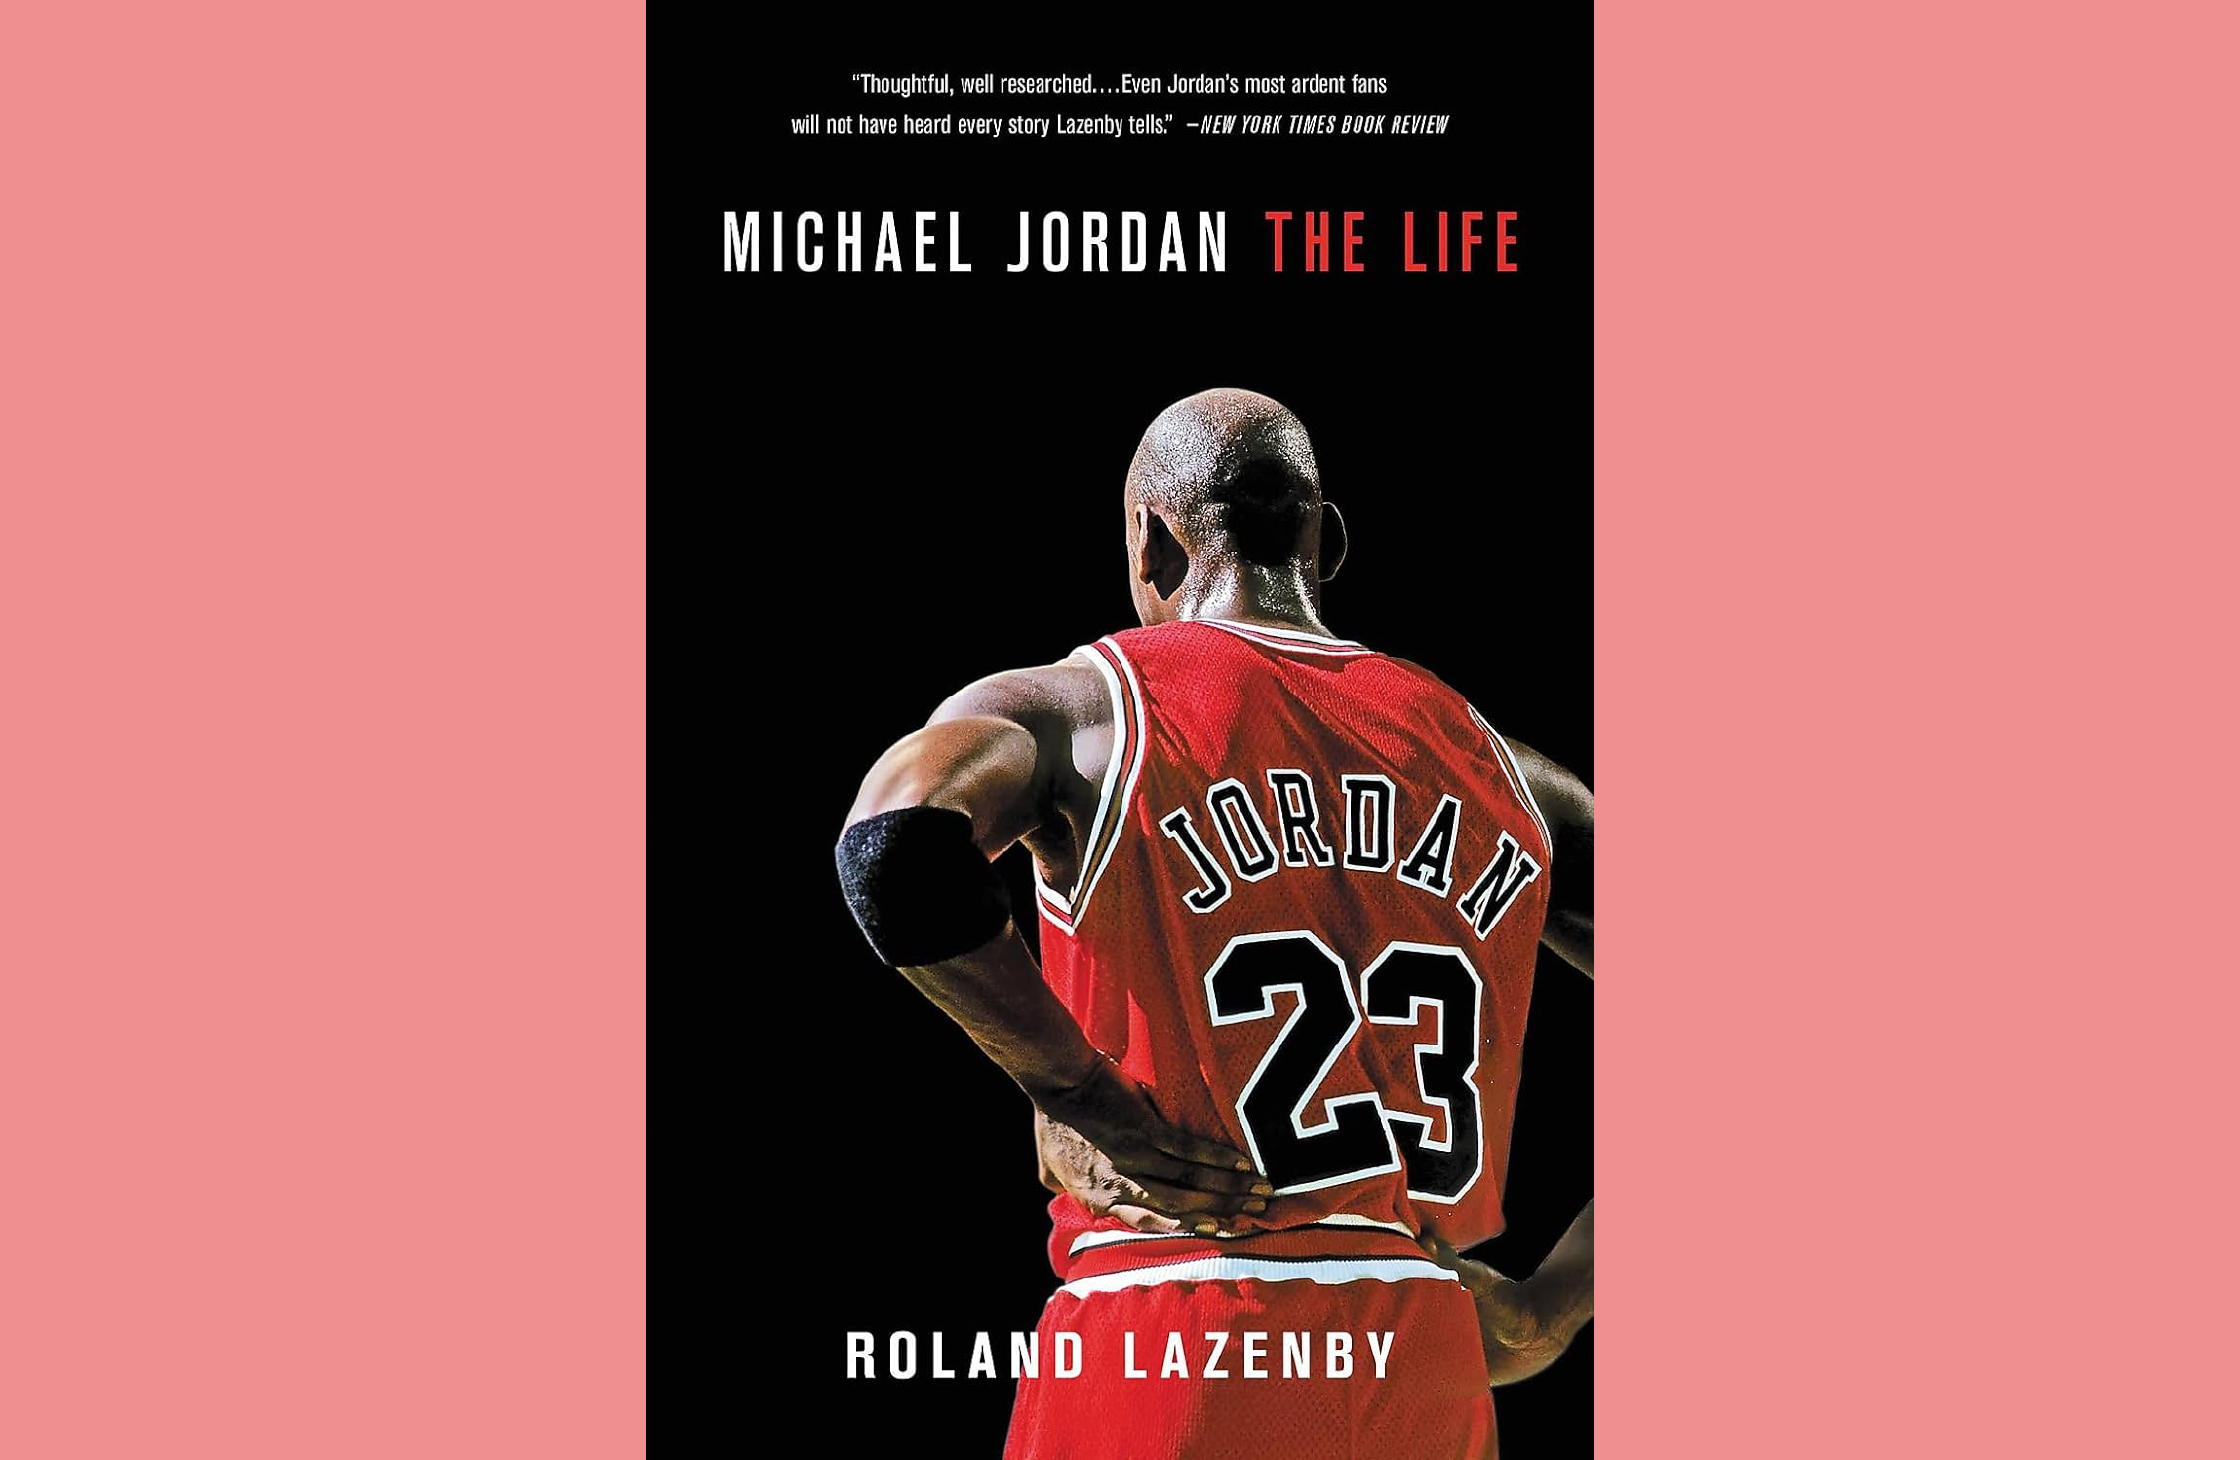 Summary: Michael Jordan: The Life by Bruce Lazenby